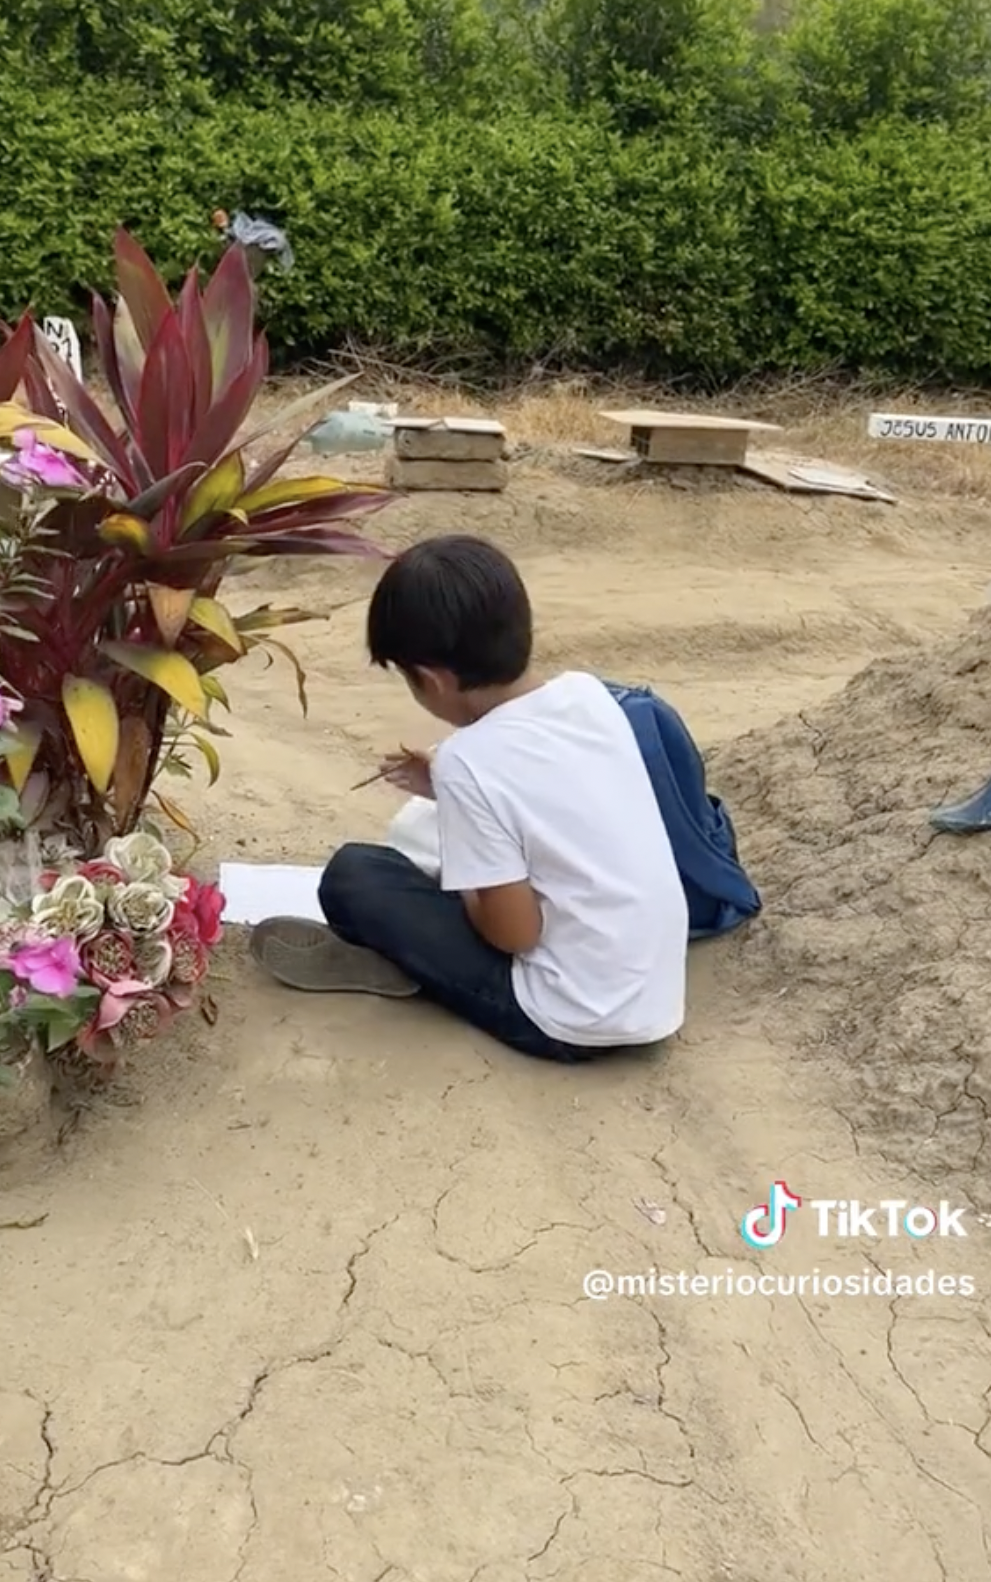 Kike doing his homework at his late mother's grave. | Source: tiktok.com/@misteriocuriosidades